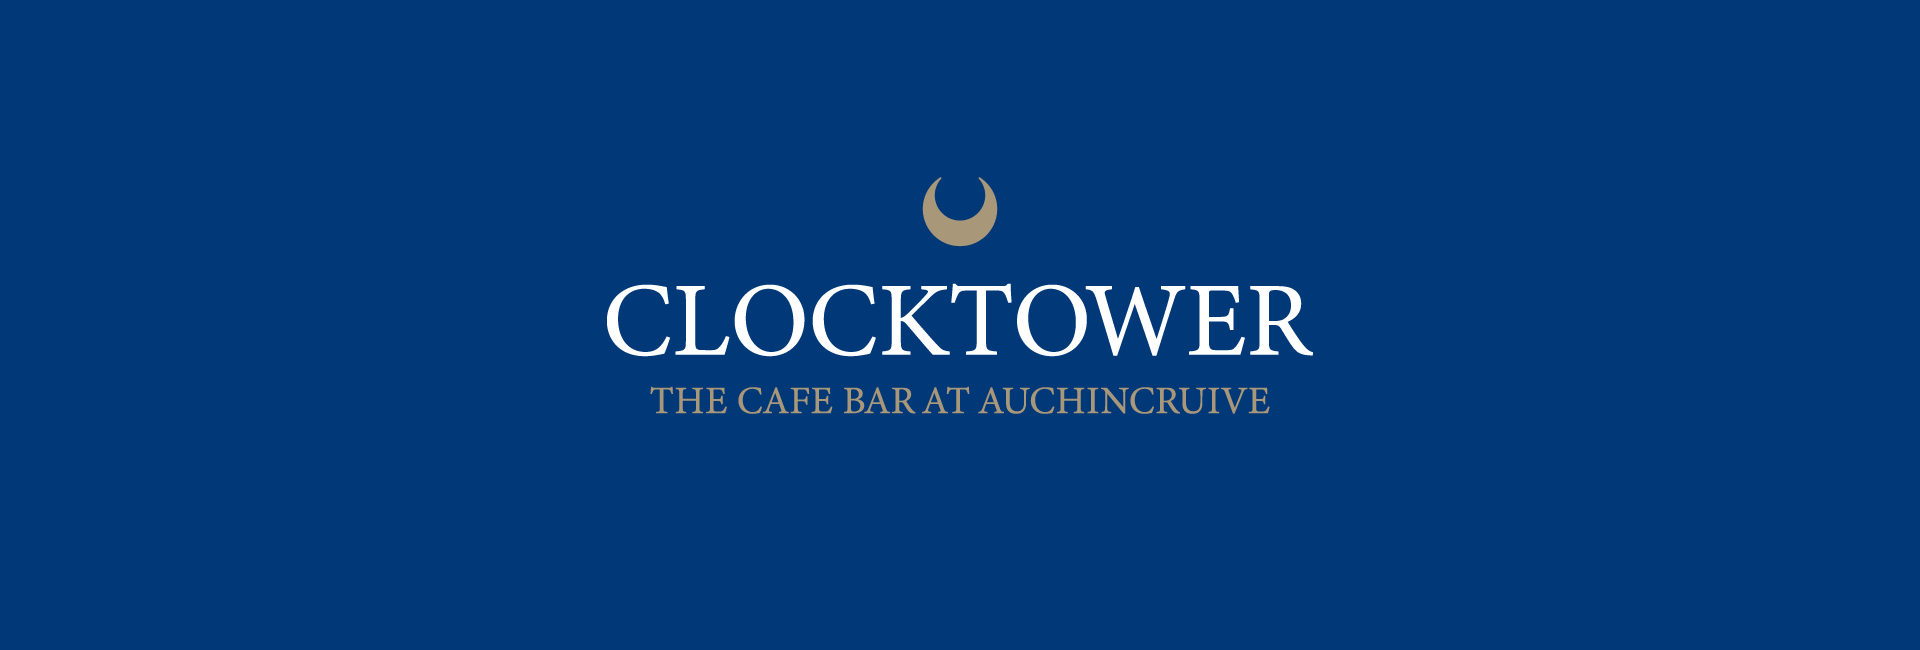 a logo for clocktower the cafe bar at auchincruive